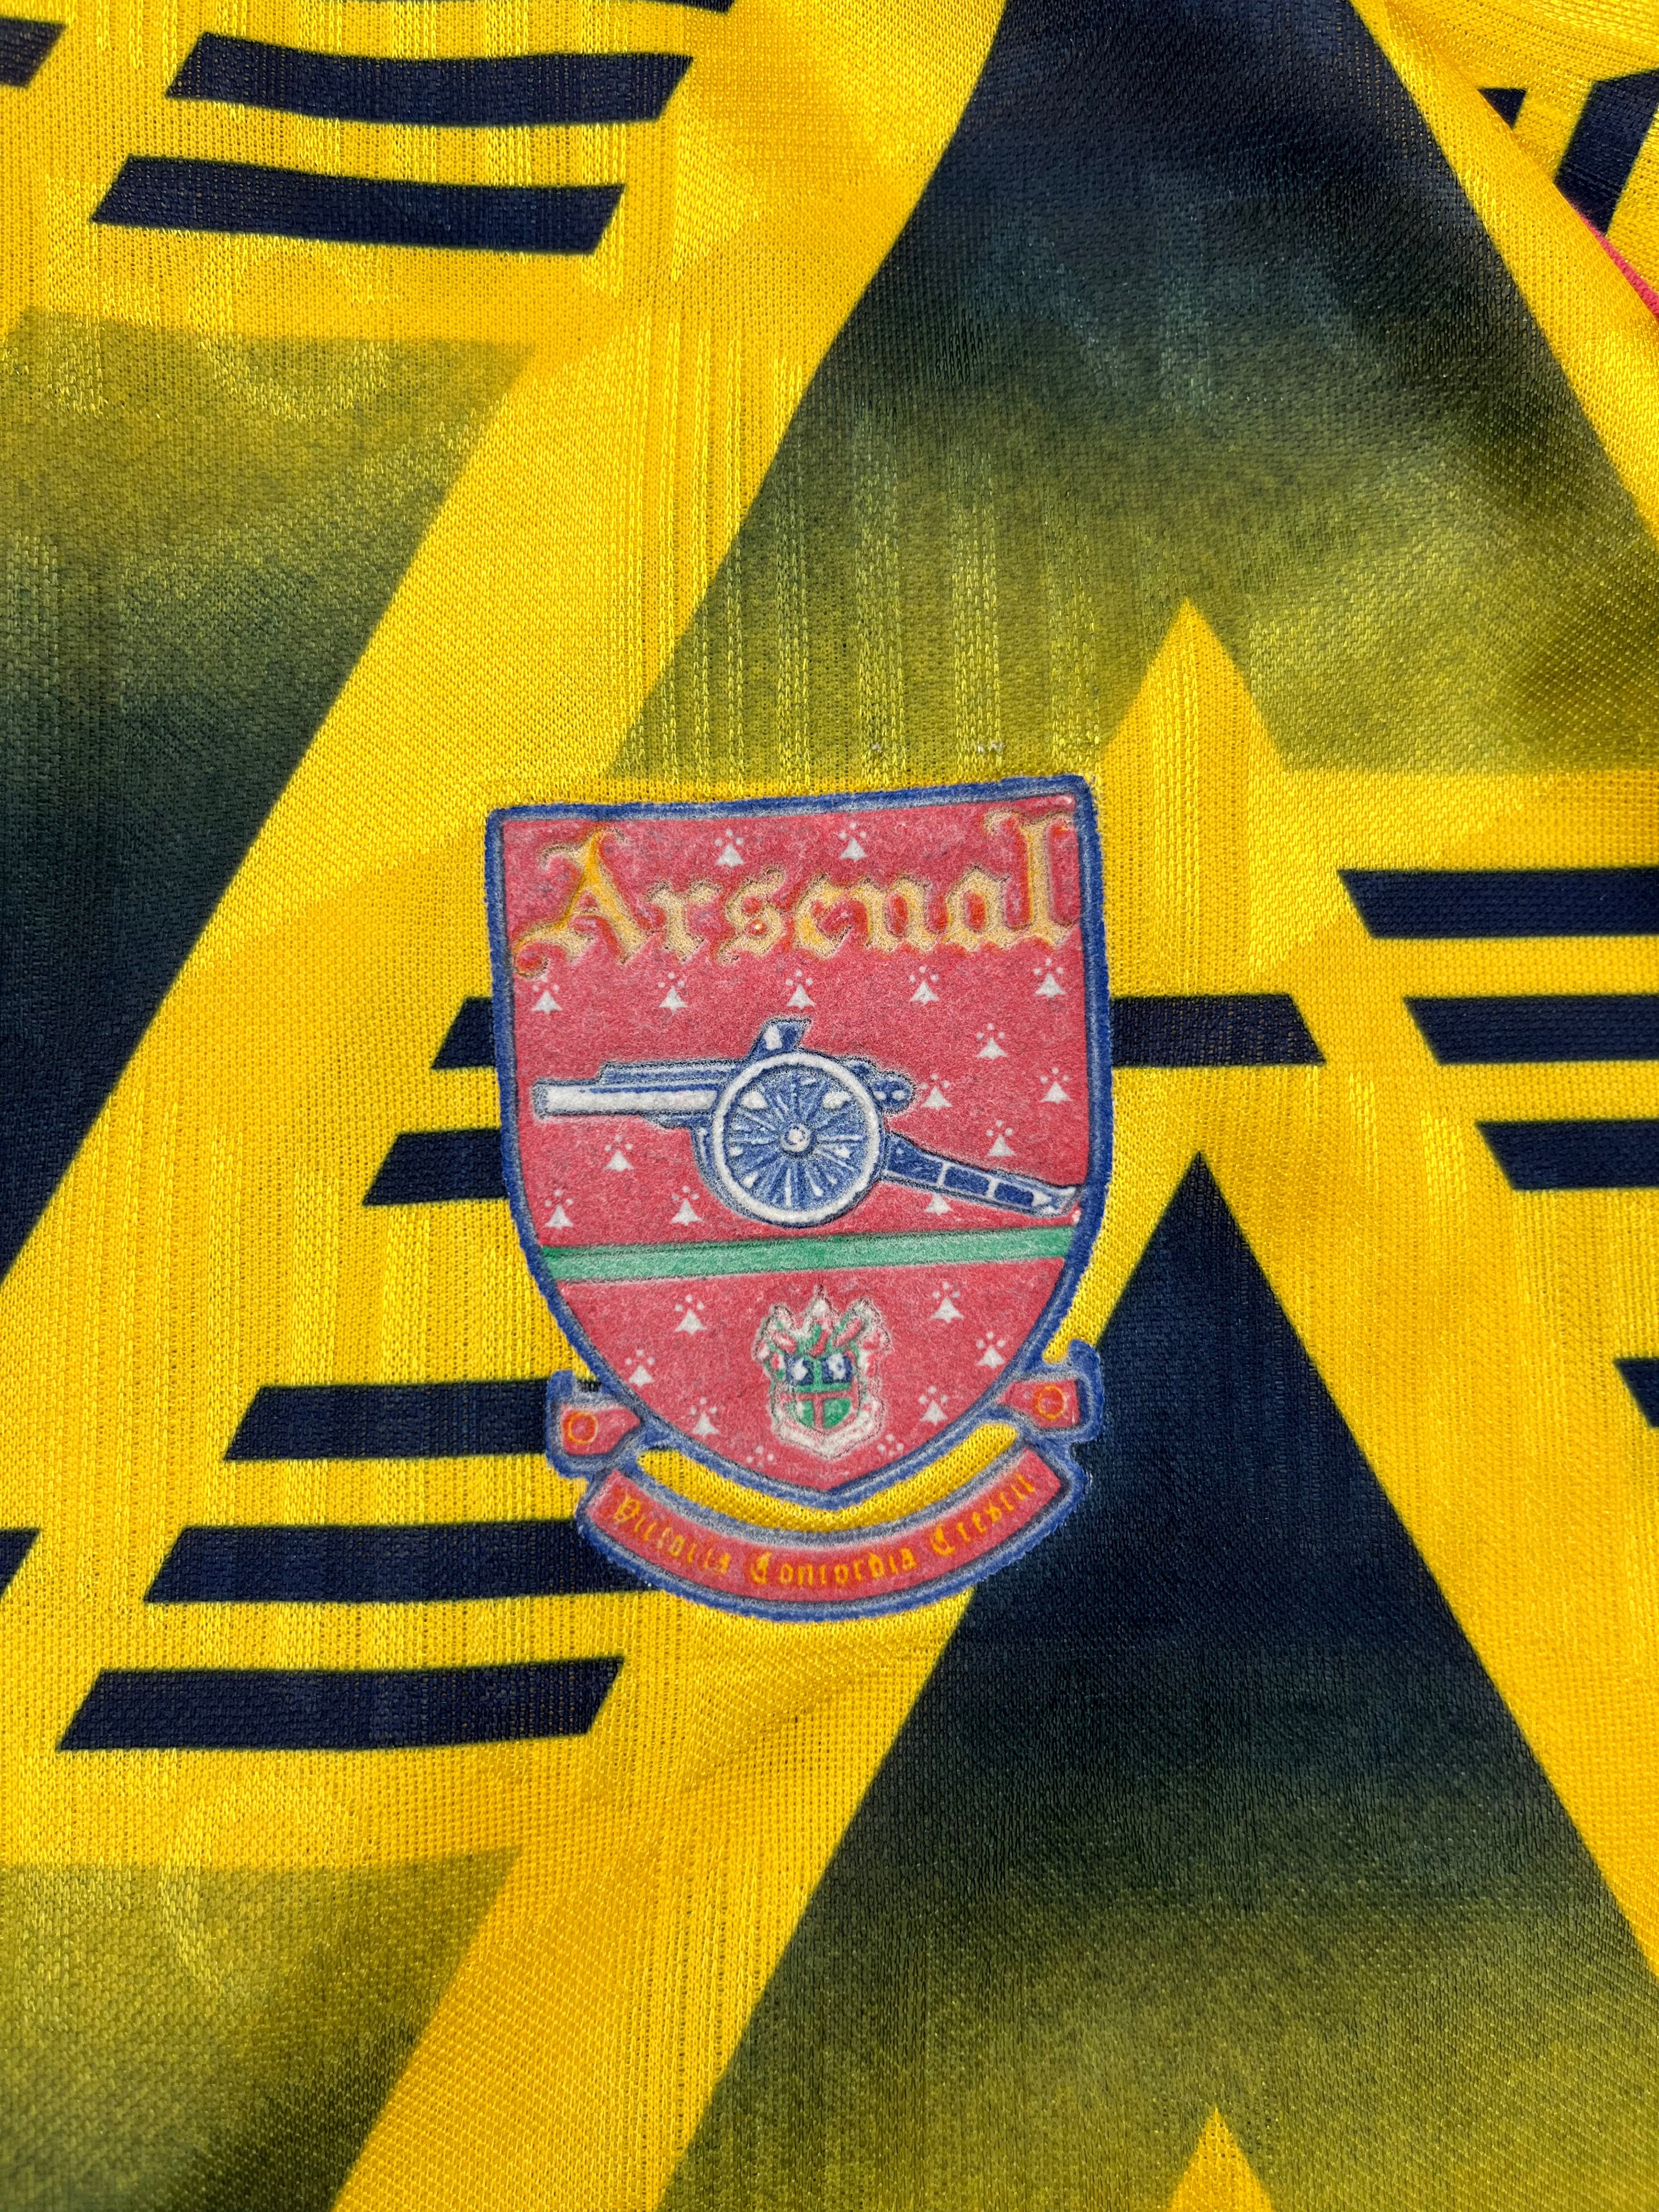 1991/93 Arsenal Away Shirt (M/L) 8/10